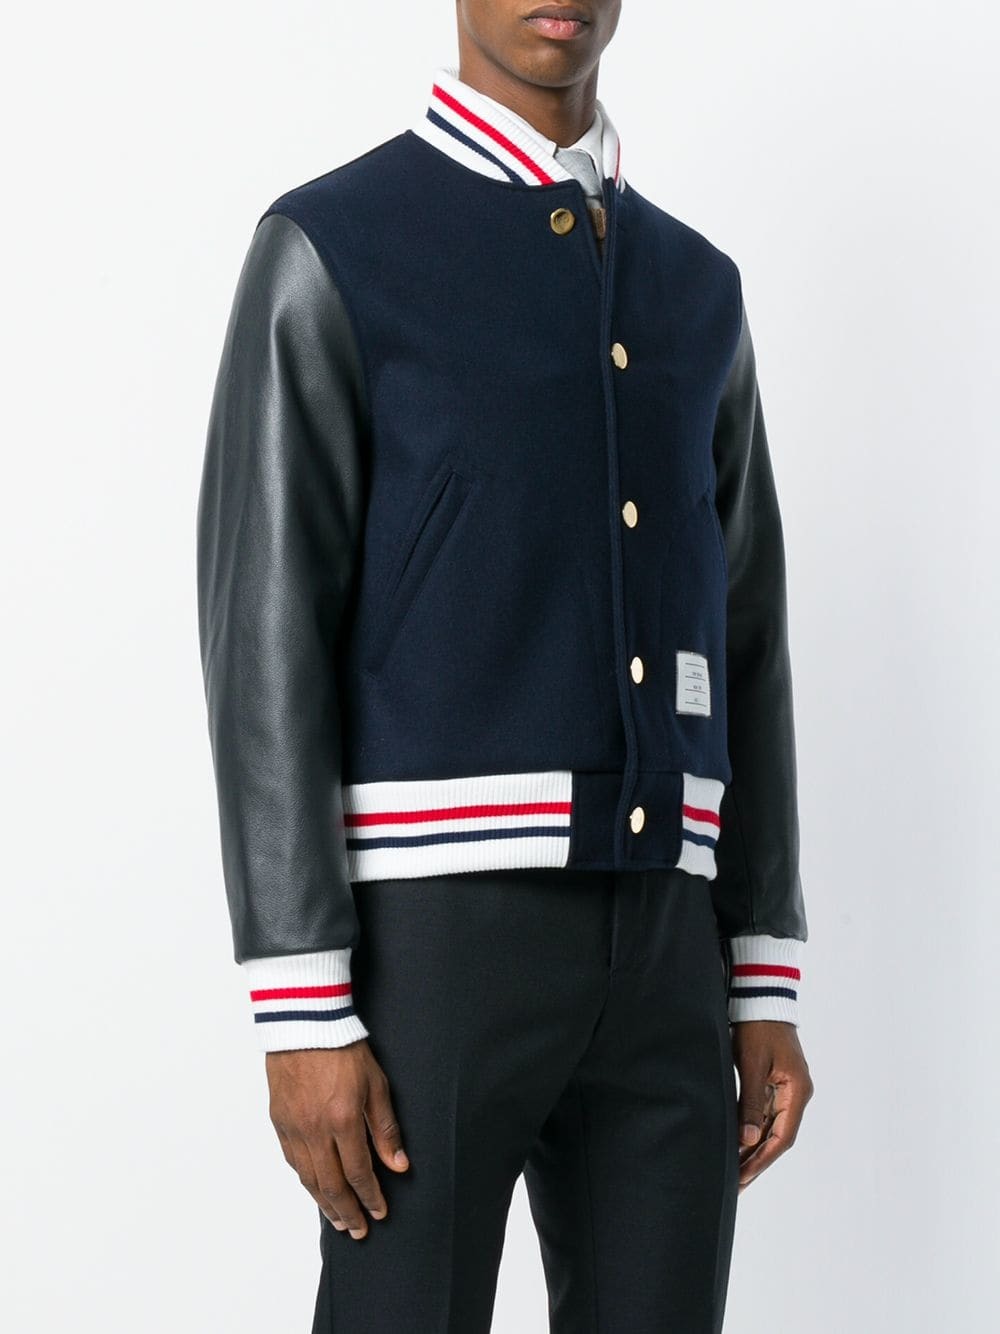 Thom Browne Button Front Melton Wool Varsity Jacket, $2,643